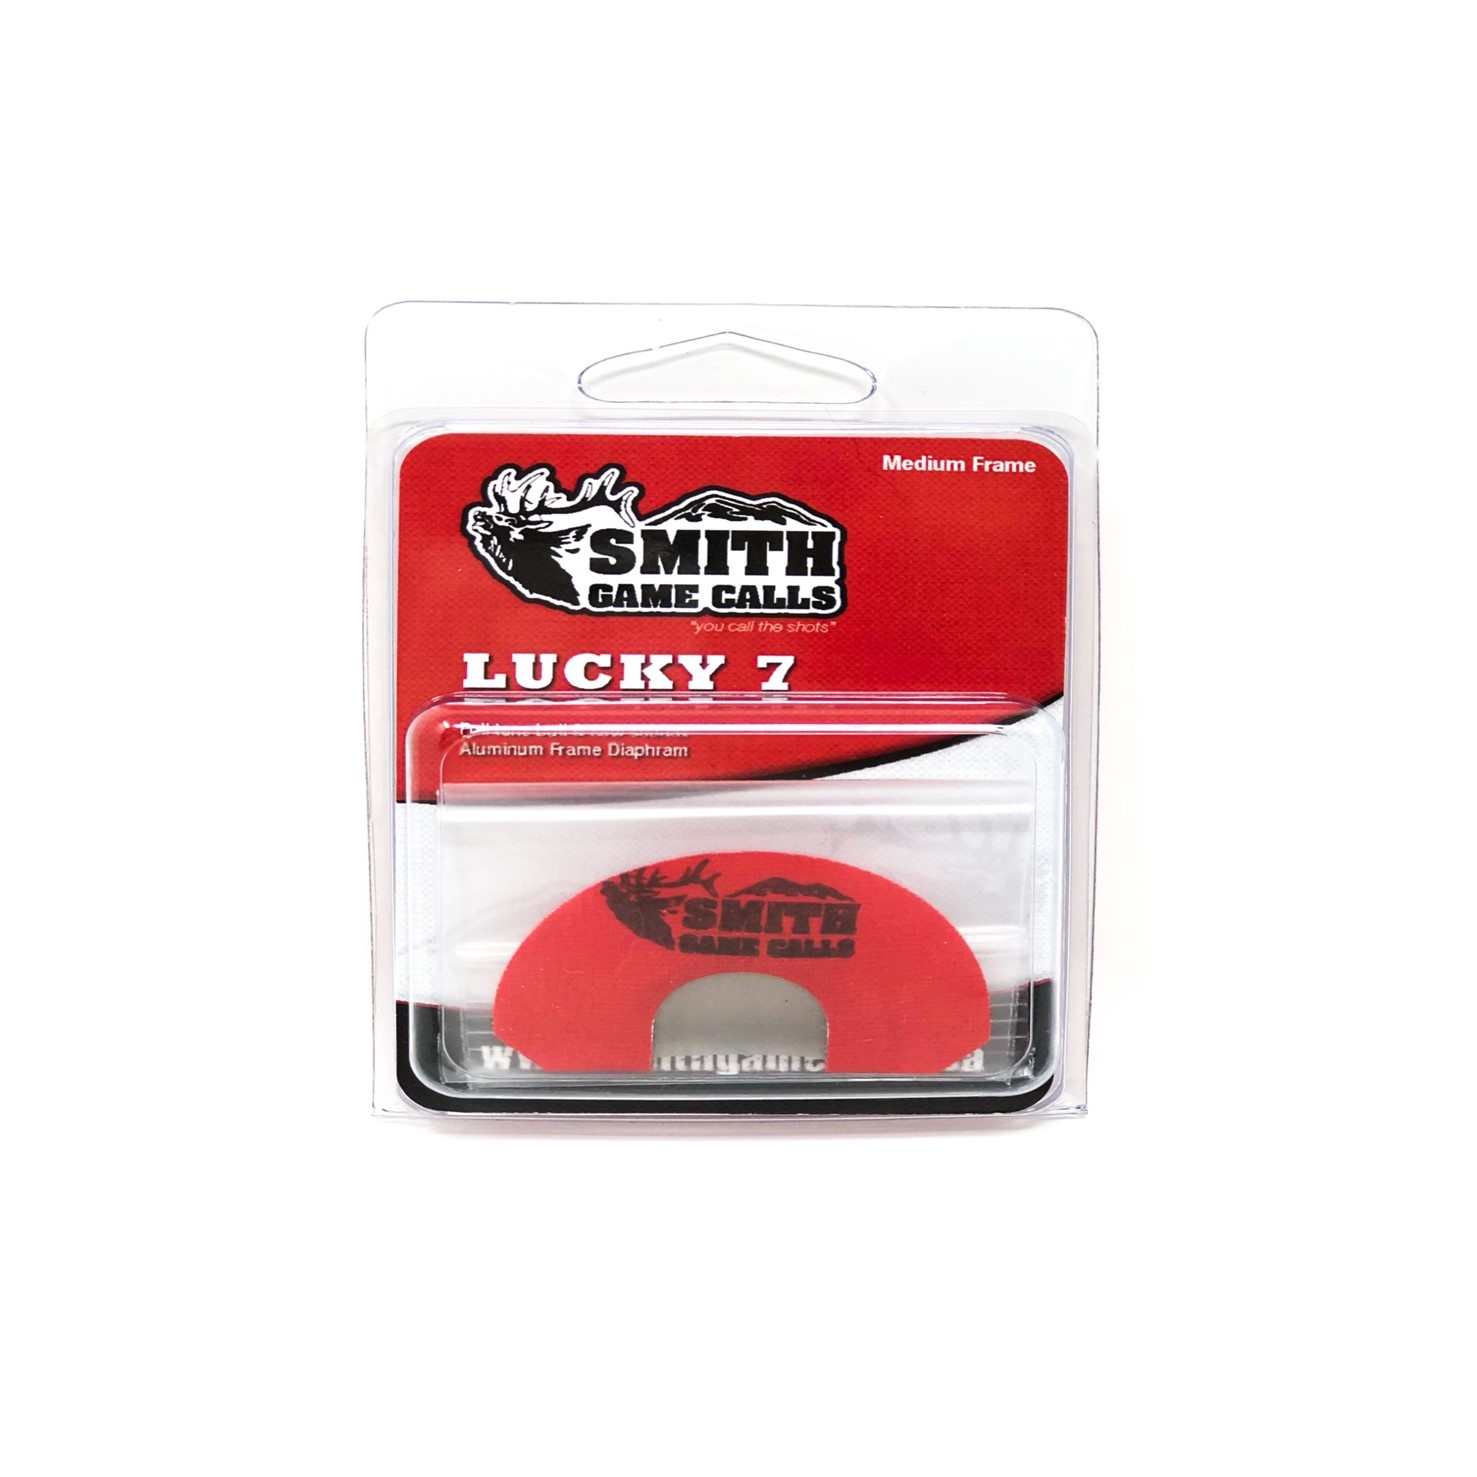 Smith Game Calls Diaphragm Elk - Lucky 7